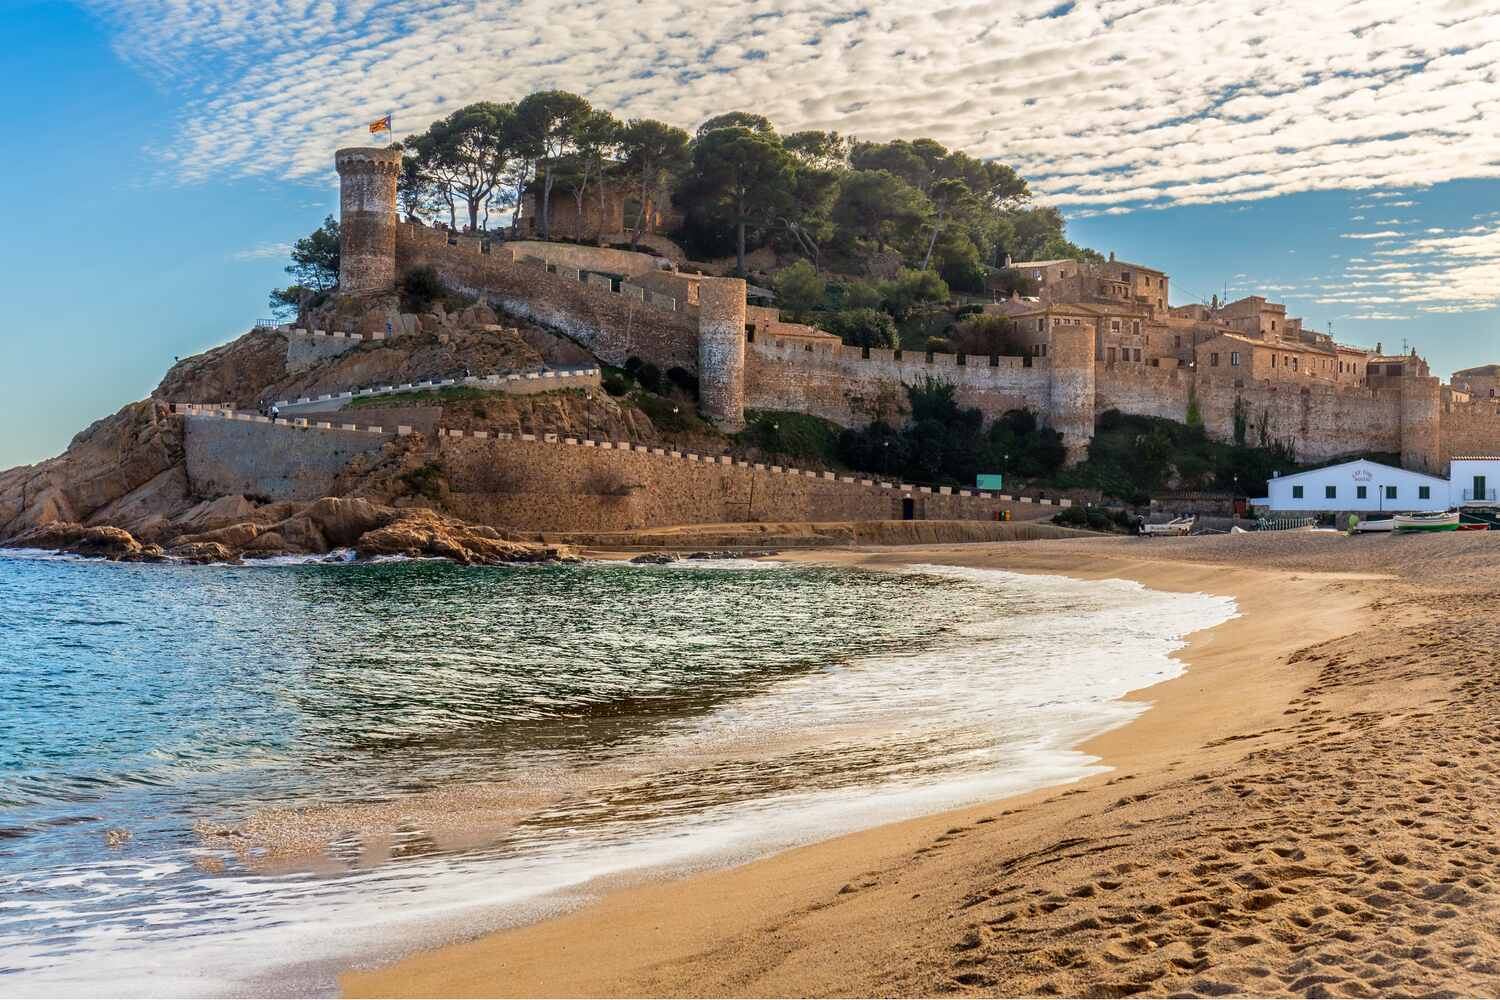 Tossa de Mar beach with its medieval castle overlooking the Costa Brava.